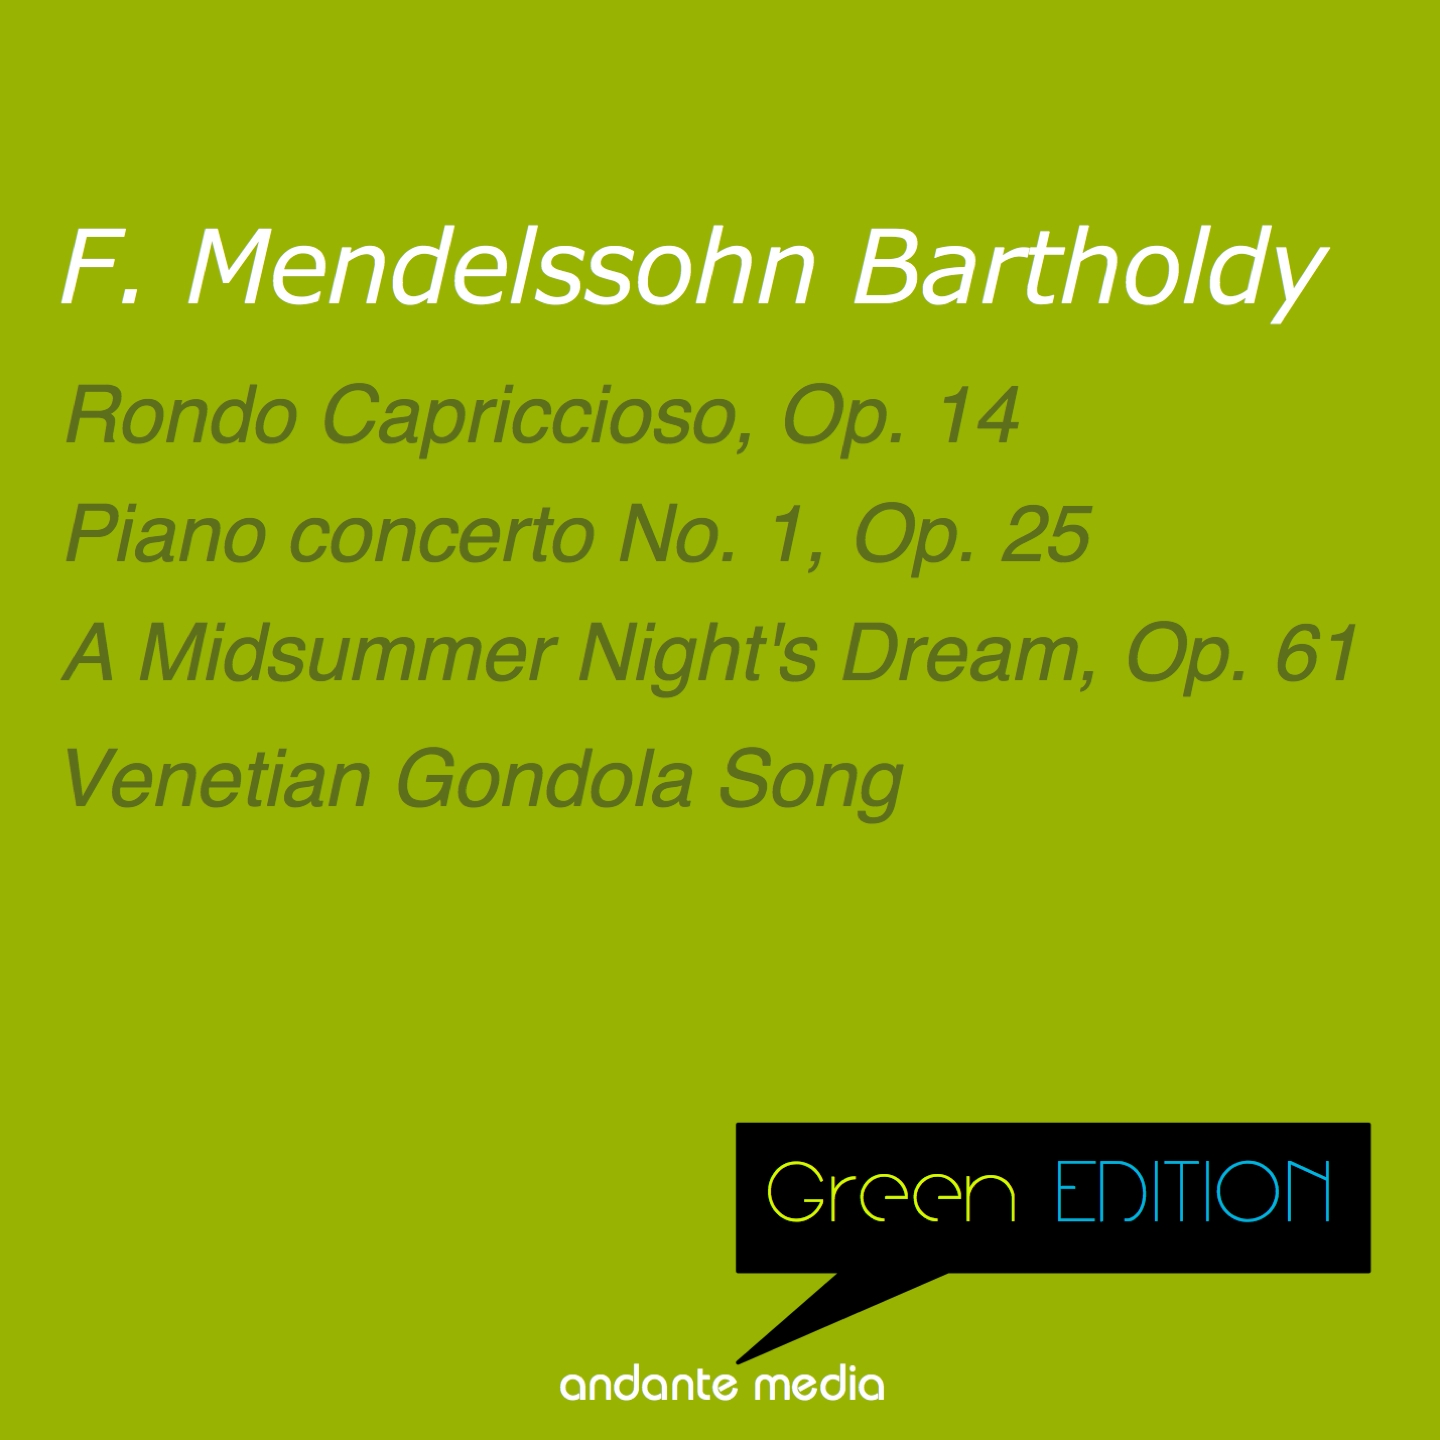 Green Edition - Mendelssohn: Rondo capriccioso, Op. 14